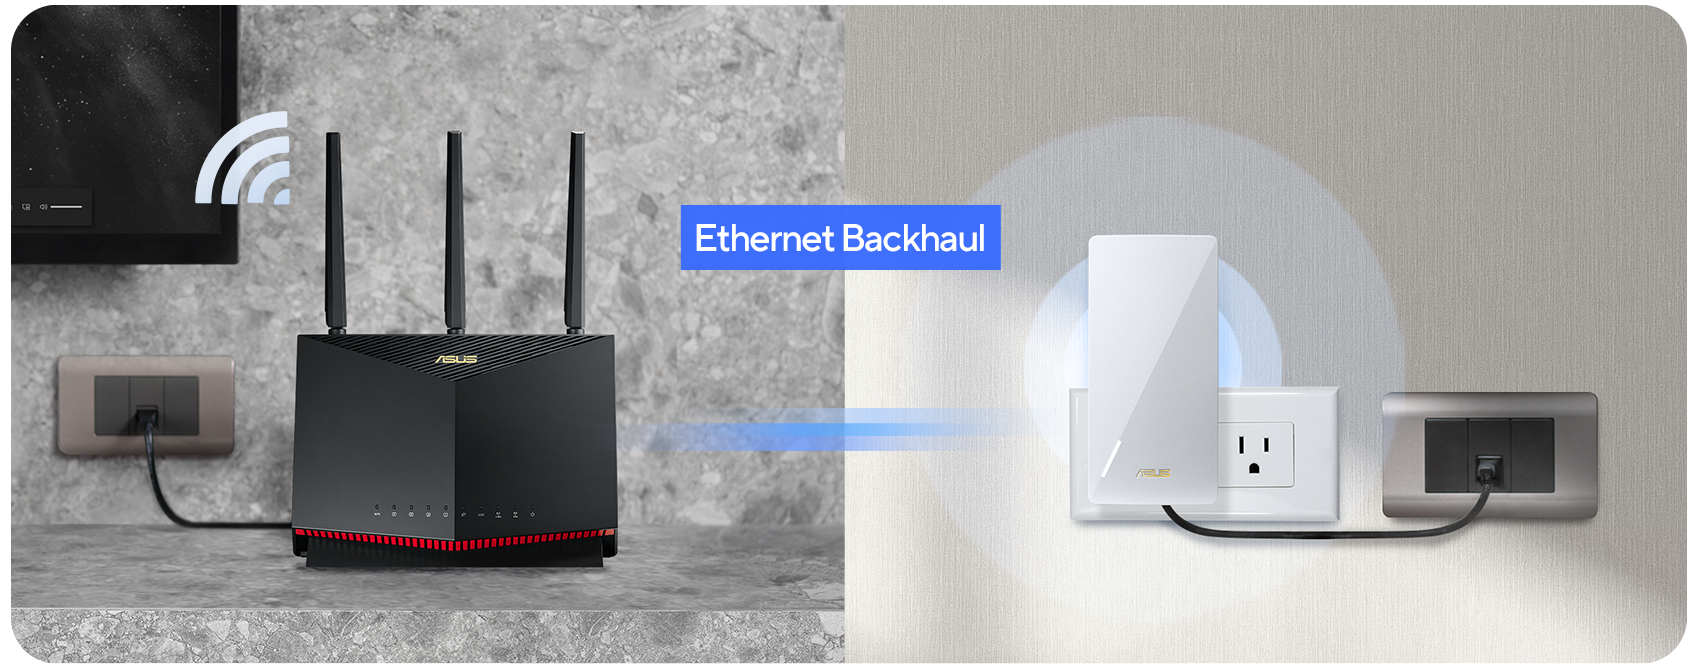 RP-AX58 באמצעות כבל Ethernet לחיבור לרשת מקומית.